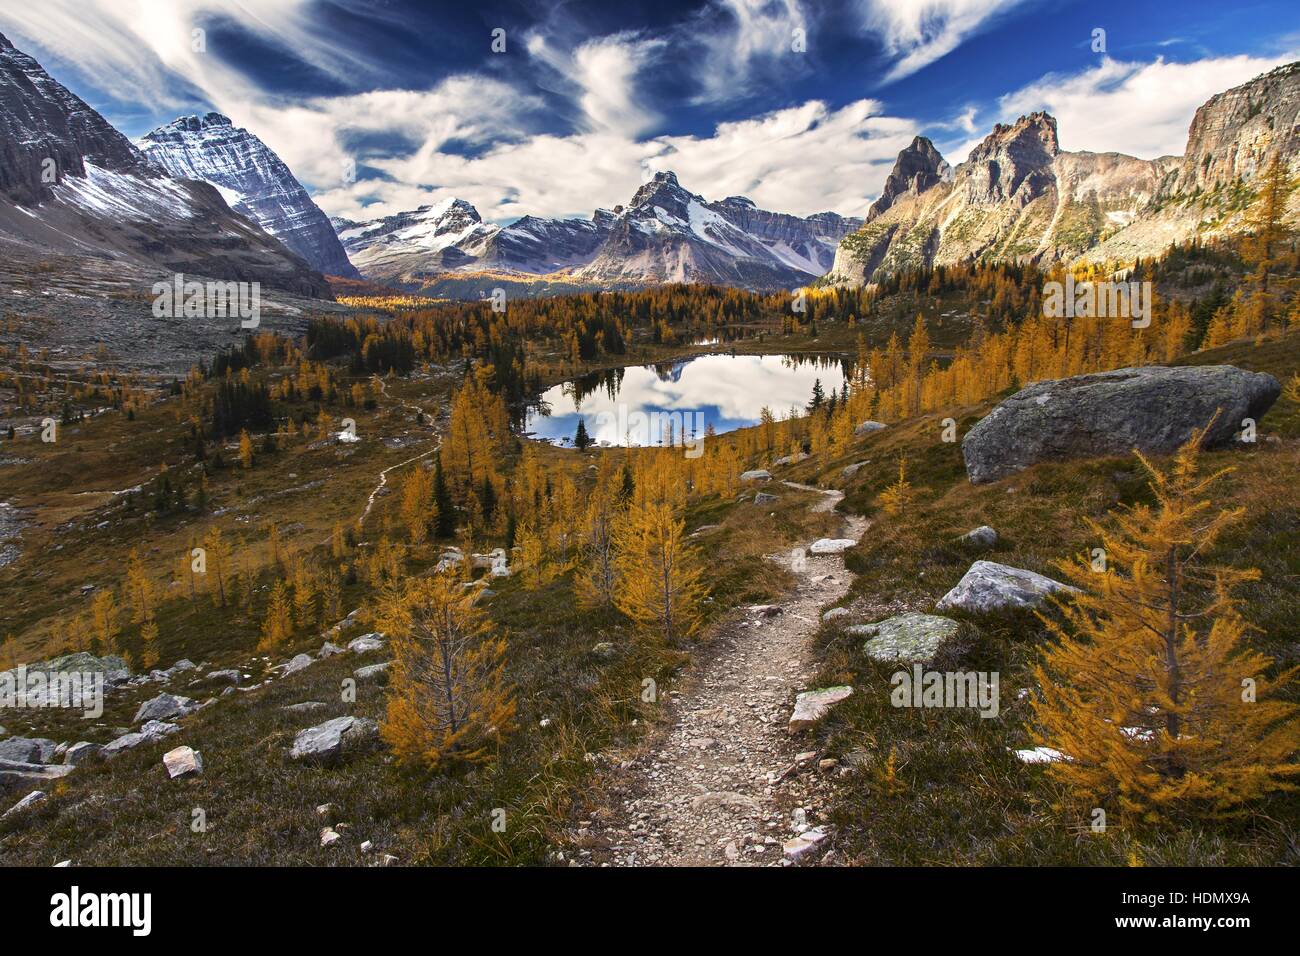 Snowy Rocky Mountains, Autumn Larch Trees, Blue Lake, Dramatic Skyline.  Canadian Rockies Landscape, Yoho National Park, British Columbia Stock Photo